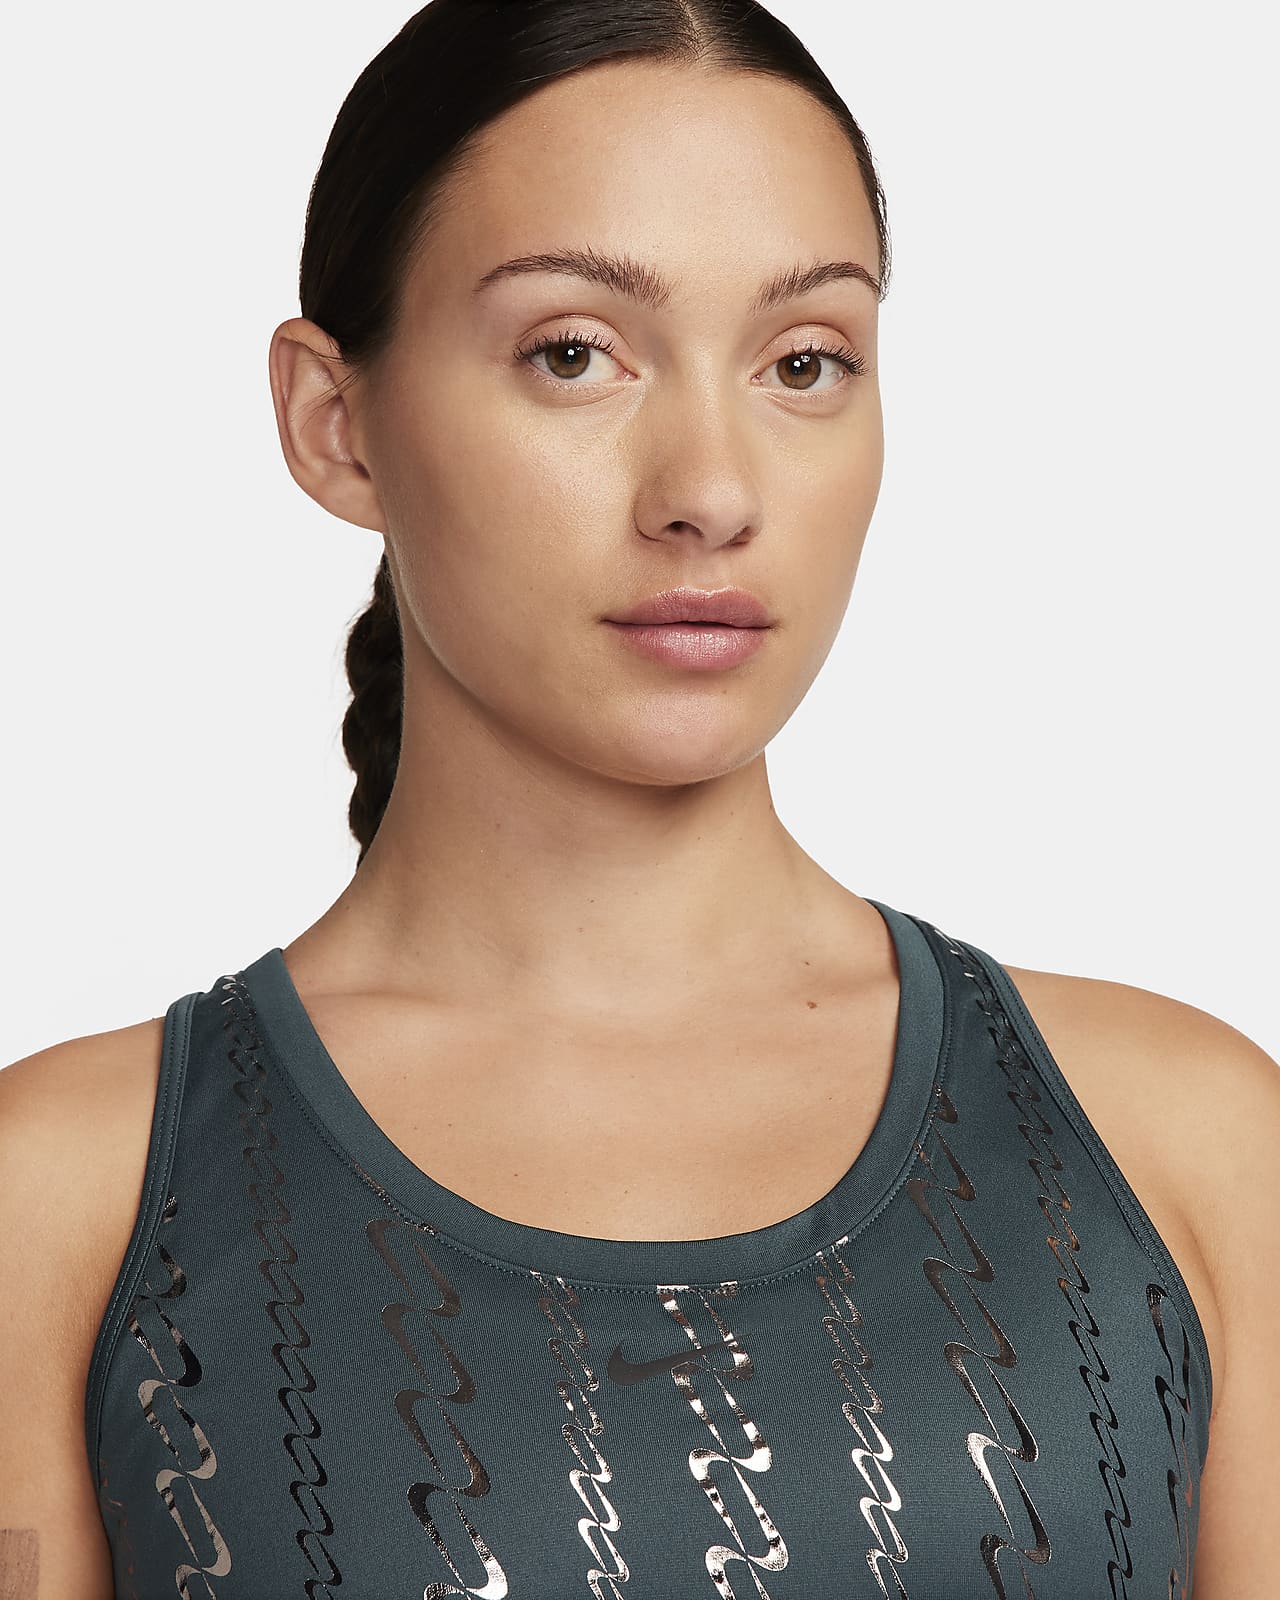 Women's Dri-FIT Tank Tops & Sleeveless Shirts. Nike CA